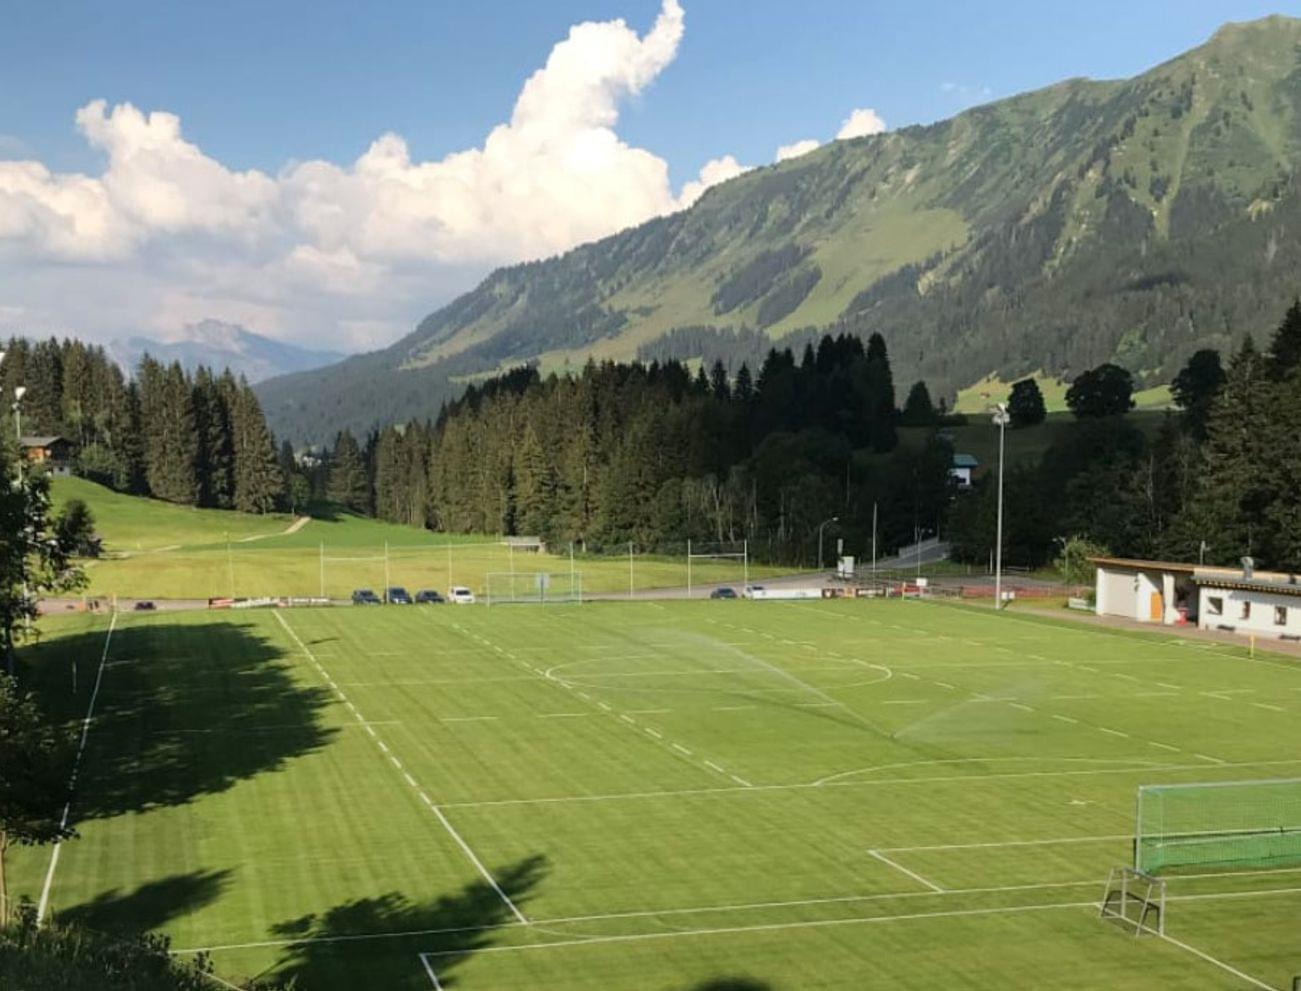 Football pitch near the Alphotel